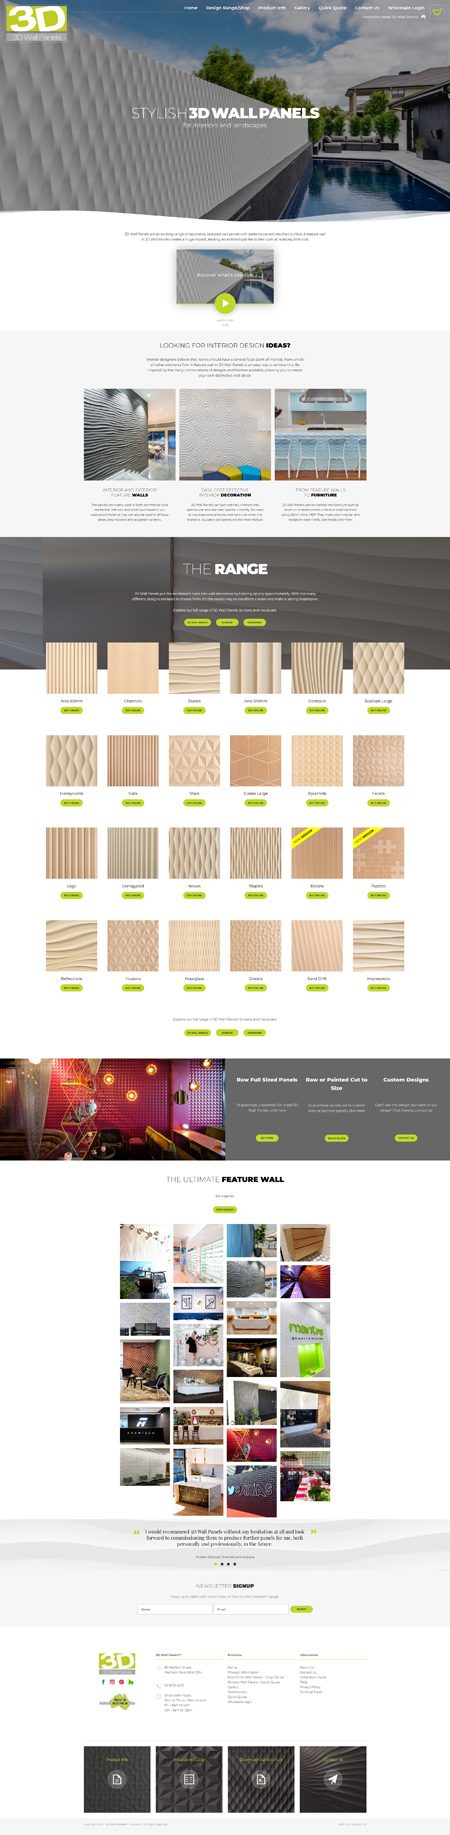 3D Wall Panels - Web Design Case Study